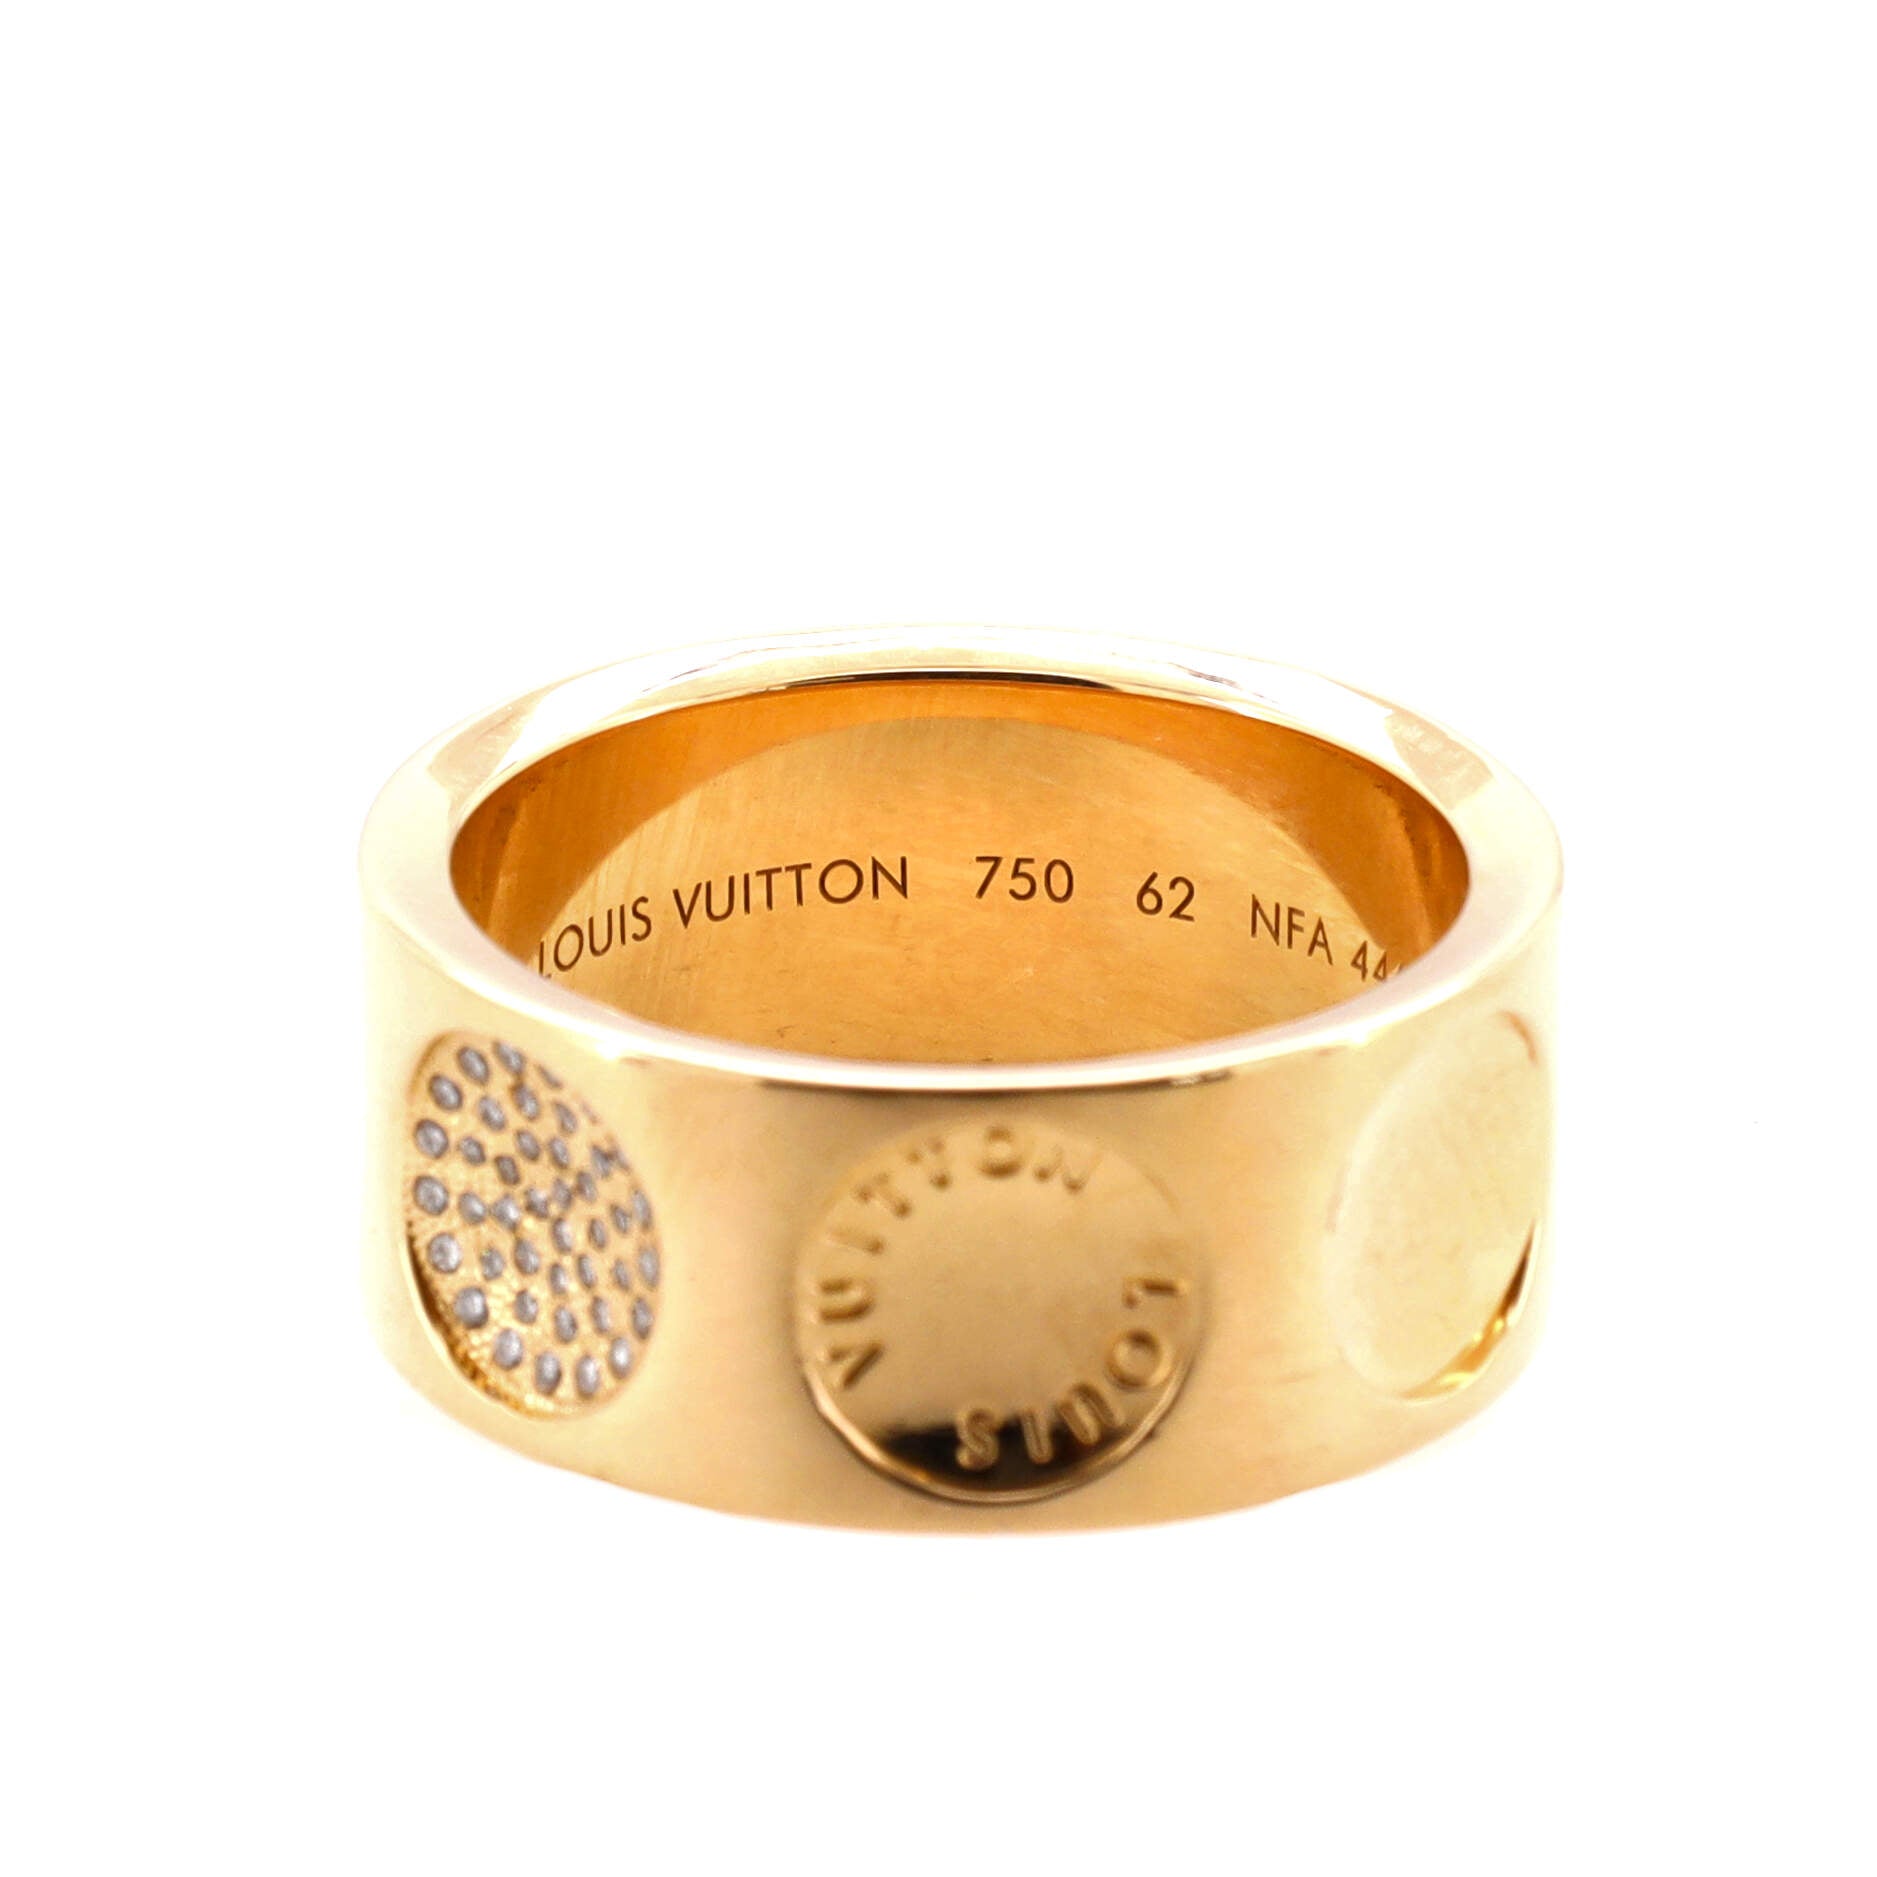 LOUIS VUITTON, Empreinte ring, 18K gold, from the Emprise